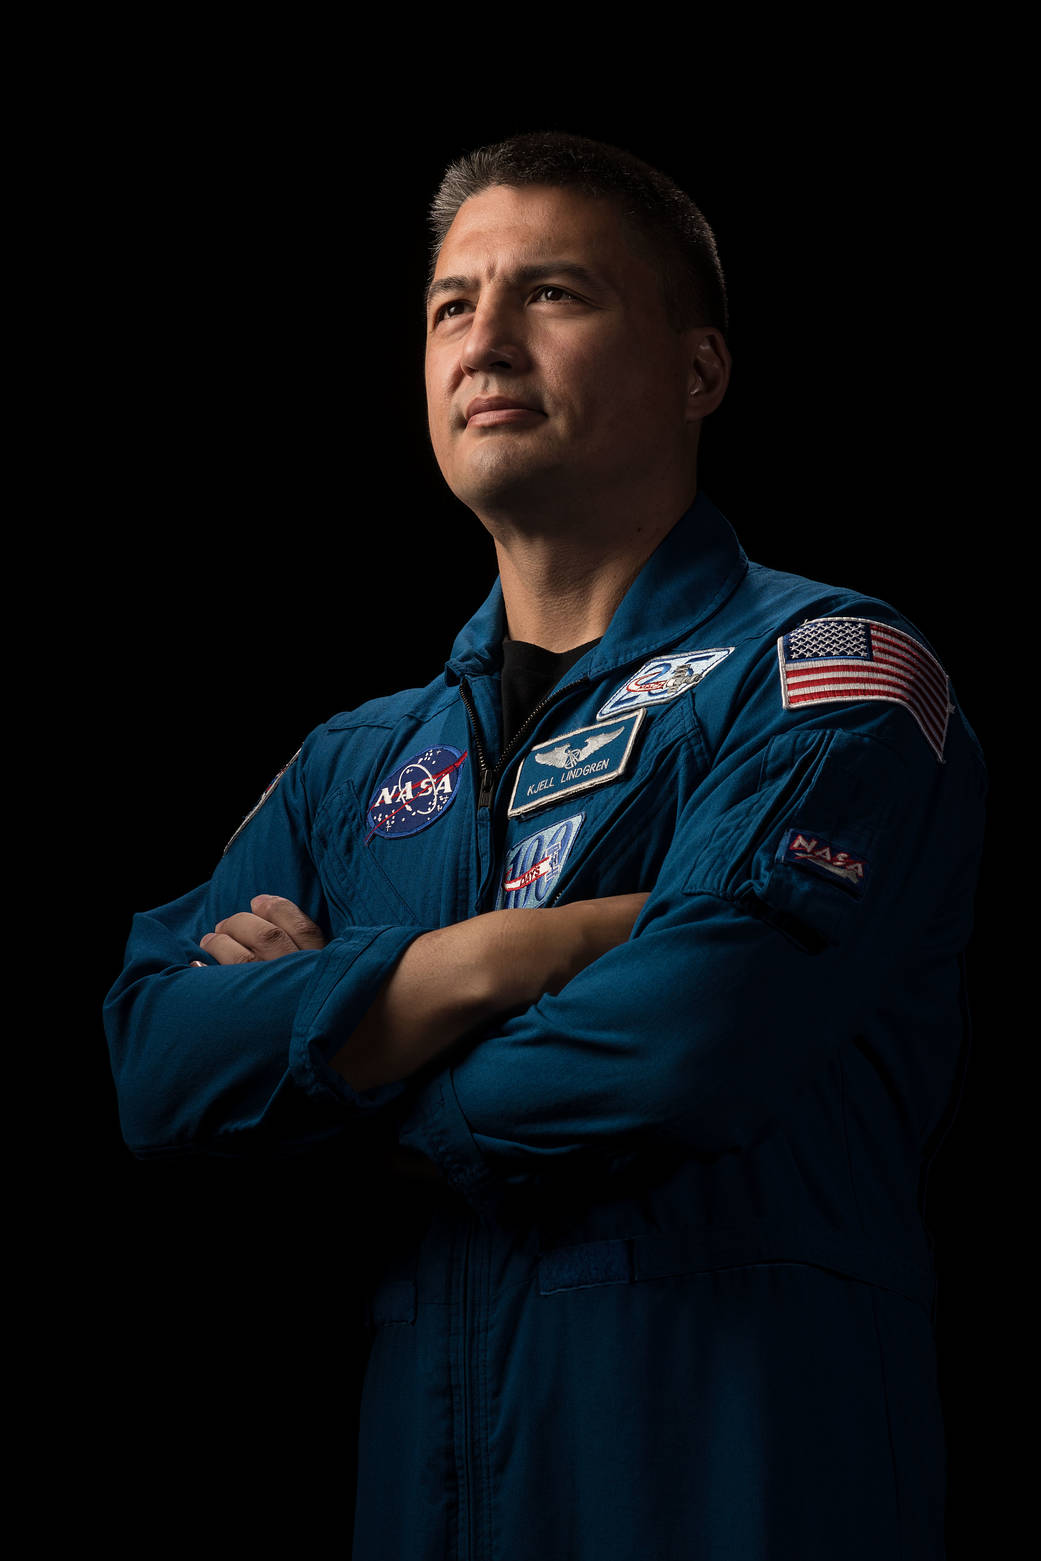 SpaceX Crew-4 Commander Kjell Lindgren